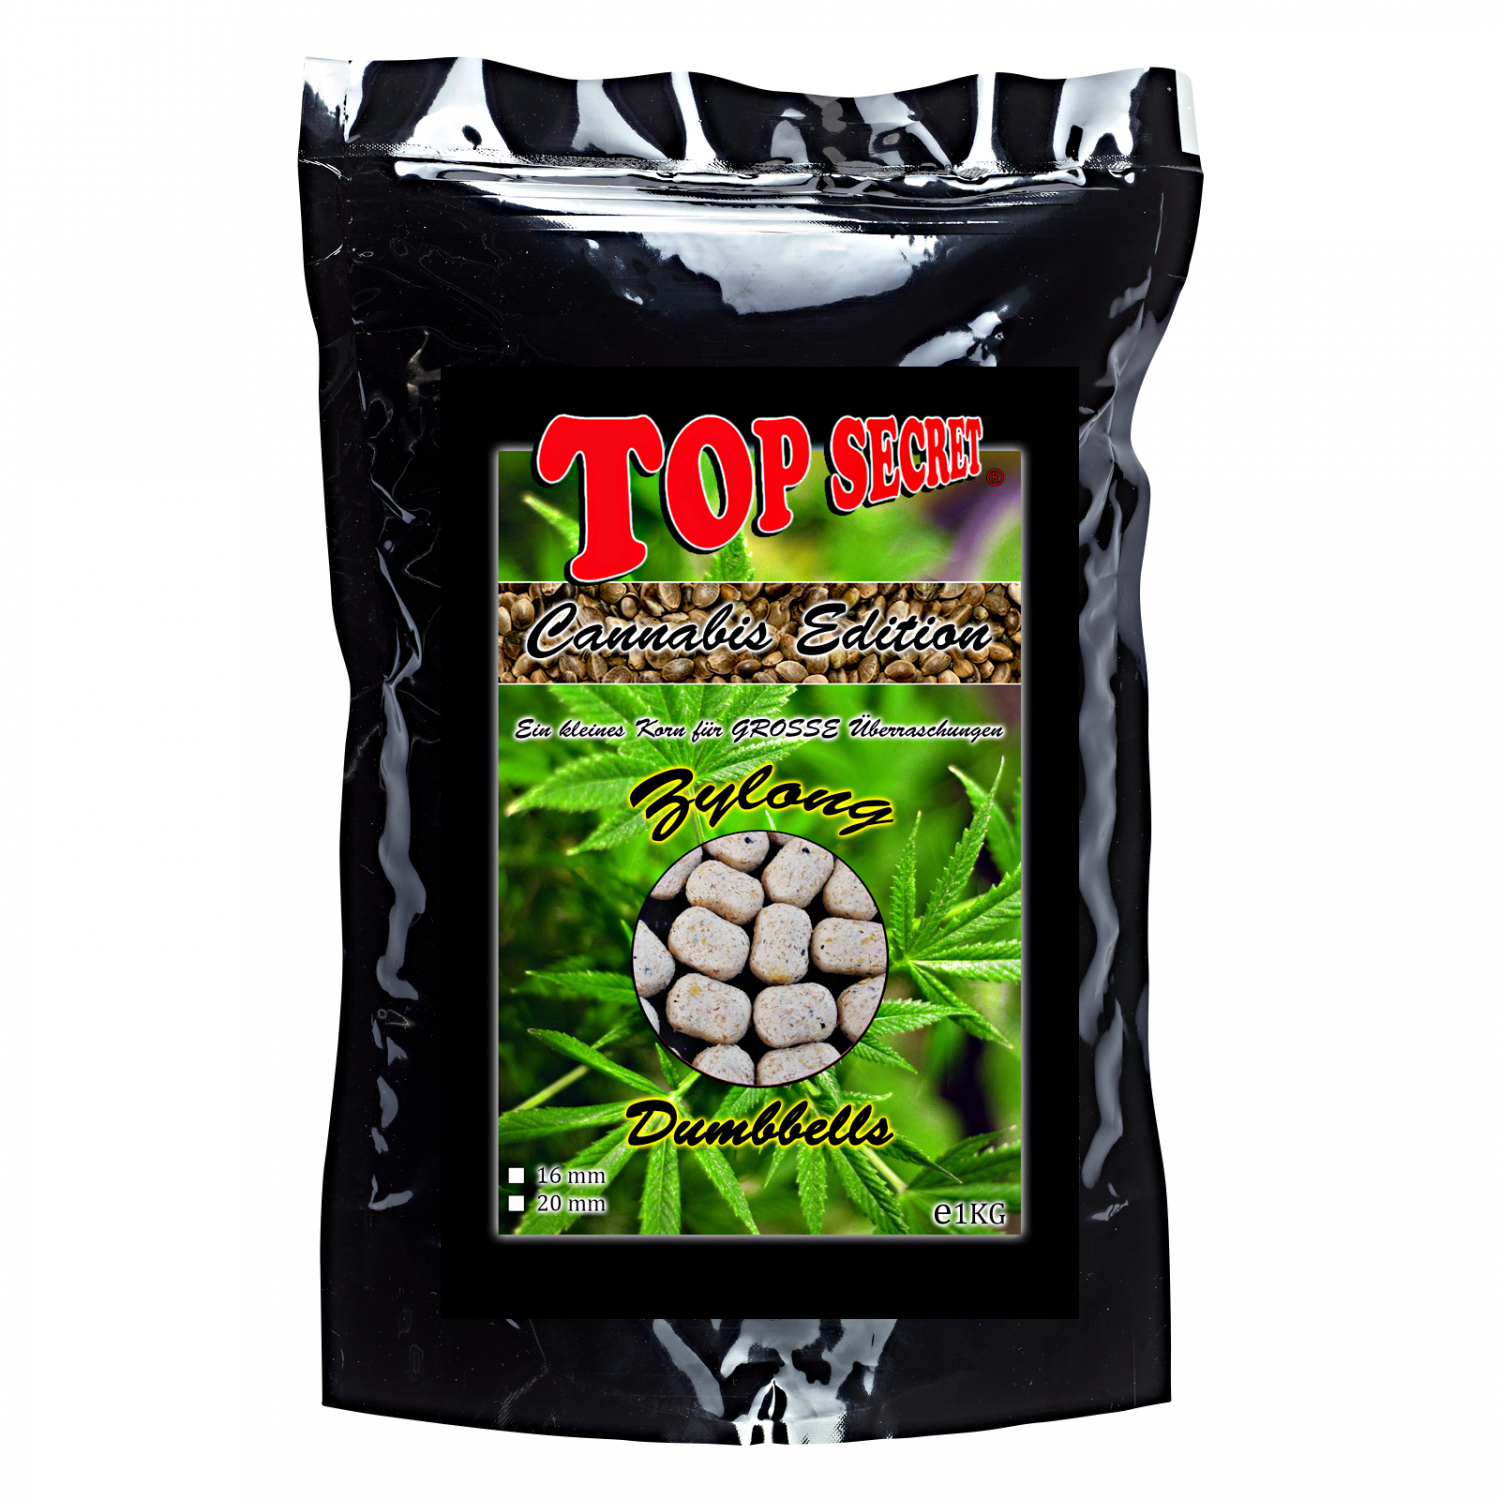 Top Secret Top Secret Cannabis Edition Dumbbell - Roasted Peanut 